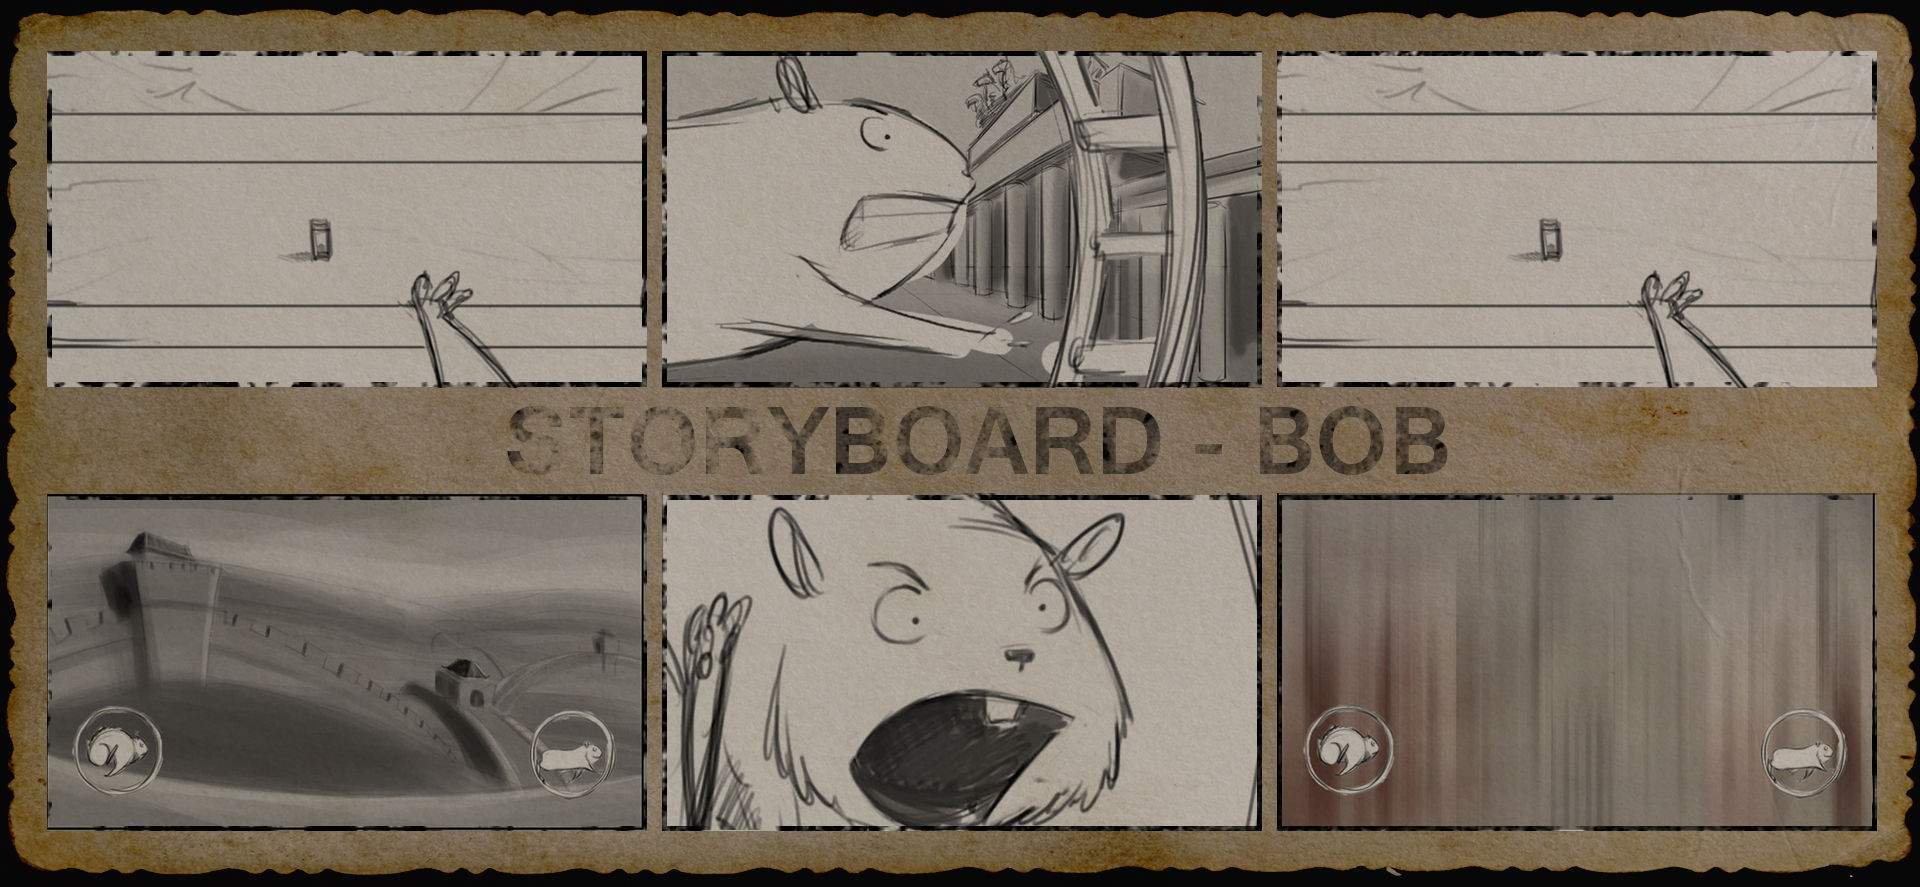 Bob_Storyboard_0005_6